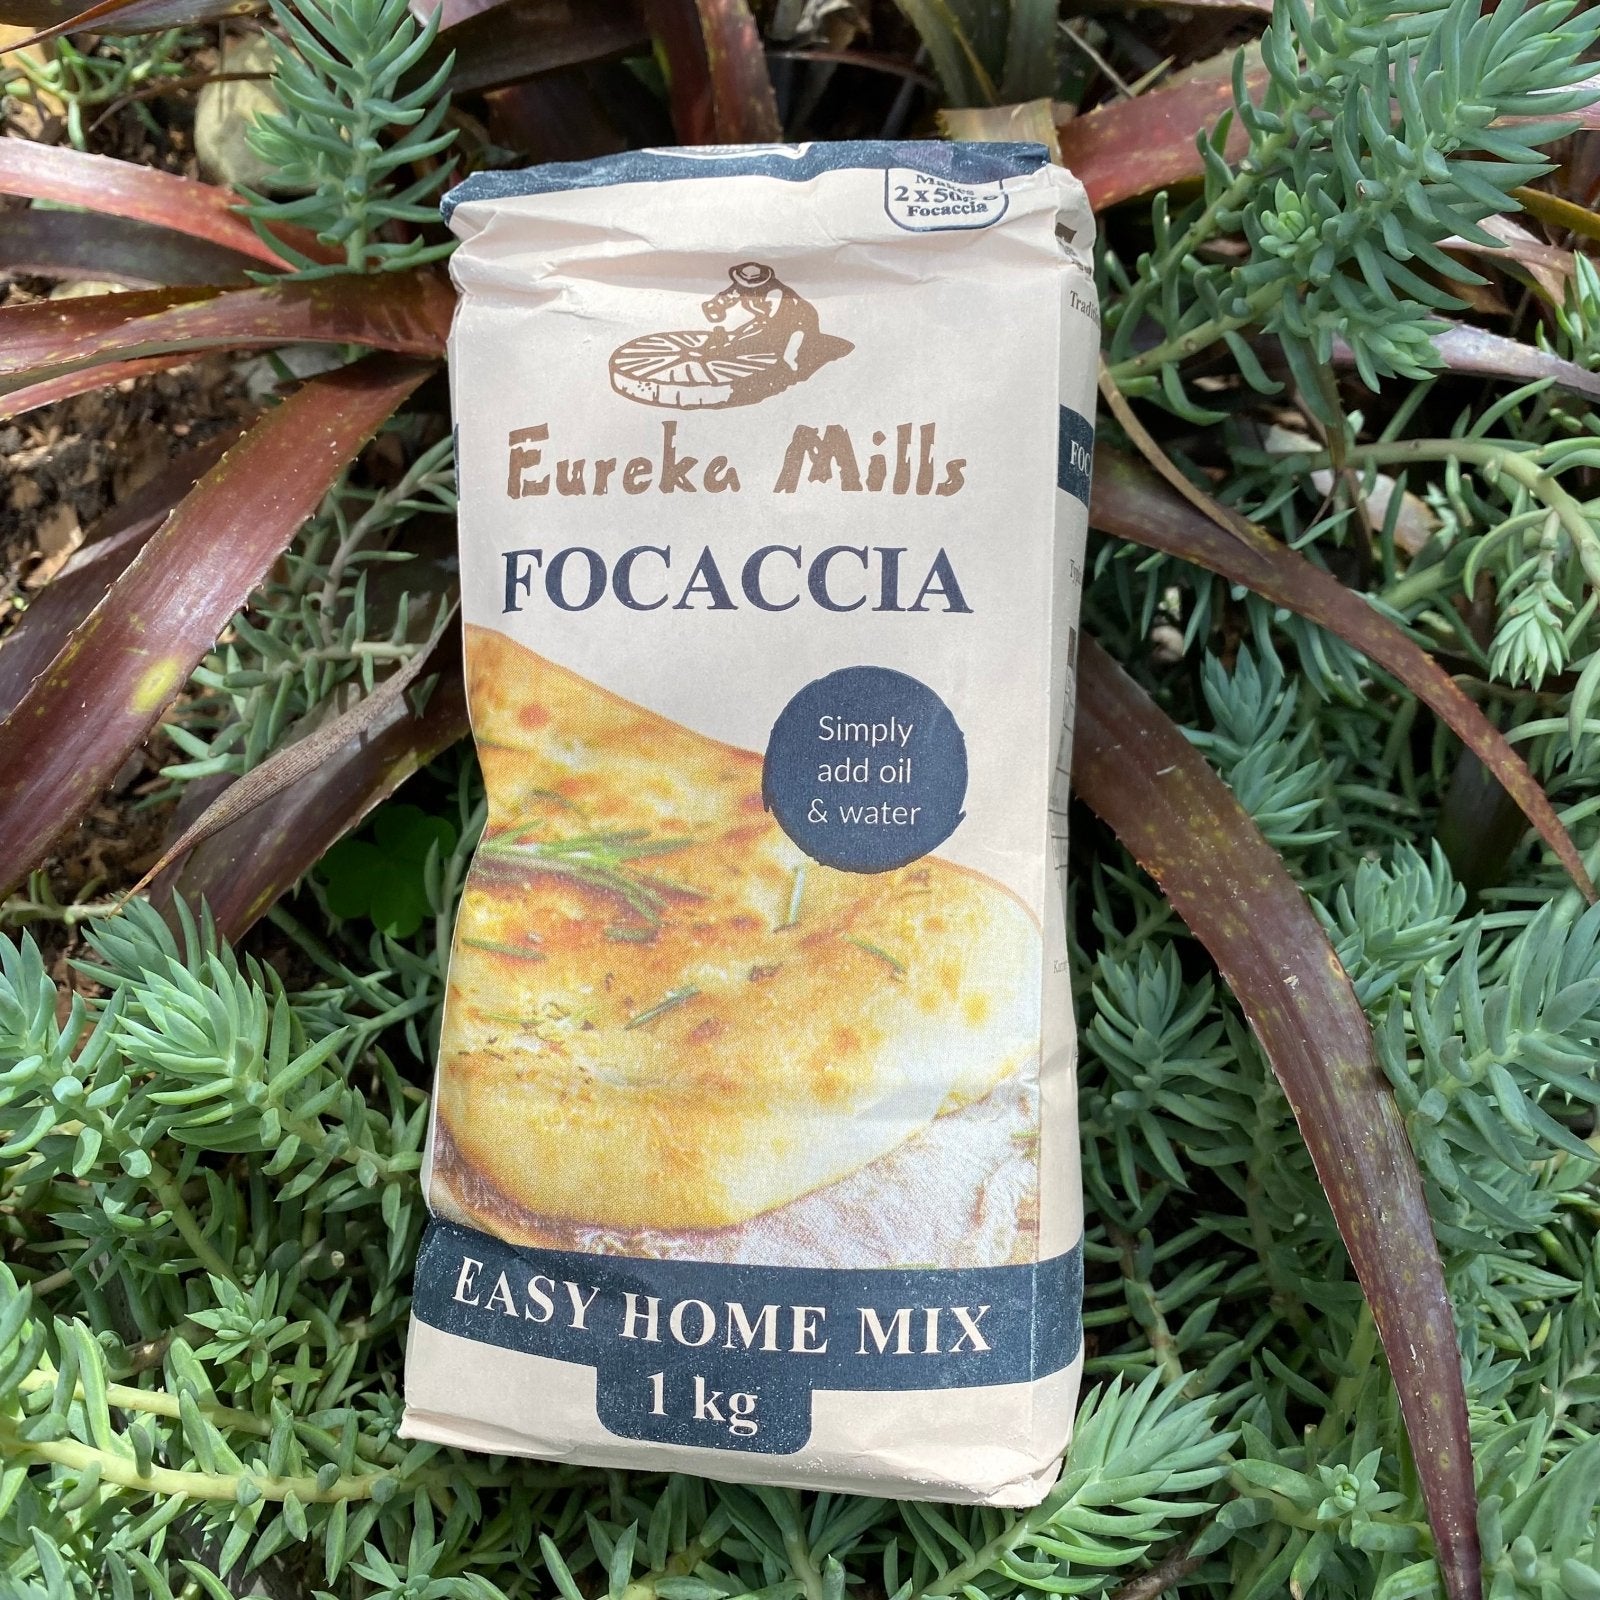 Eureka Mills Focaccia Easy Home Mix (1kg) - The Deli